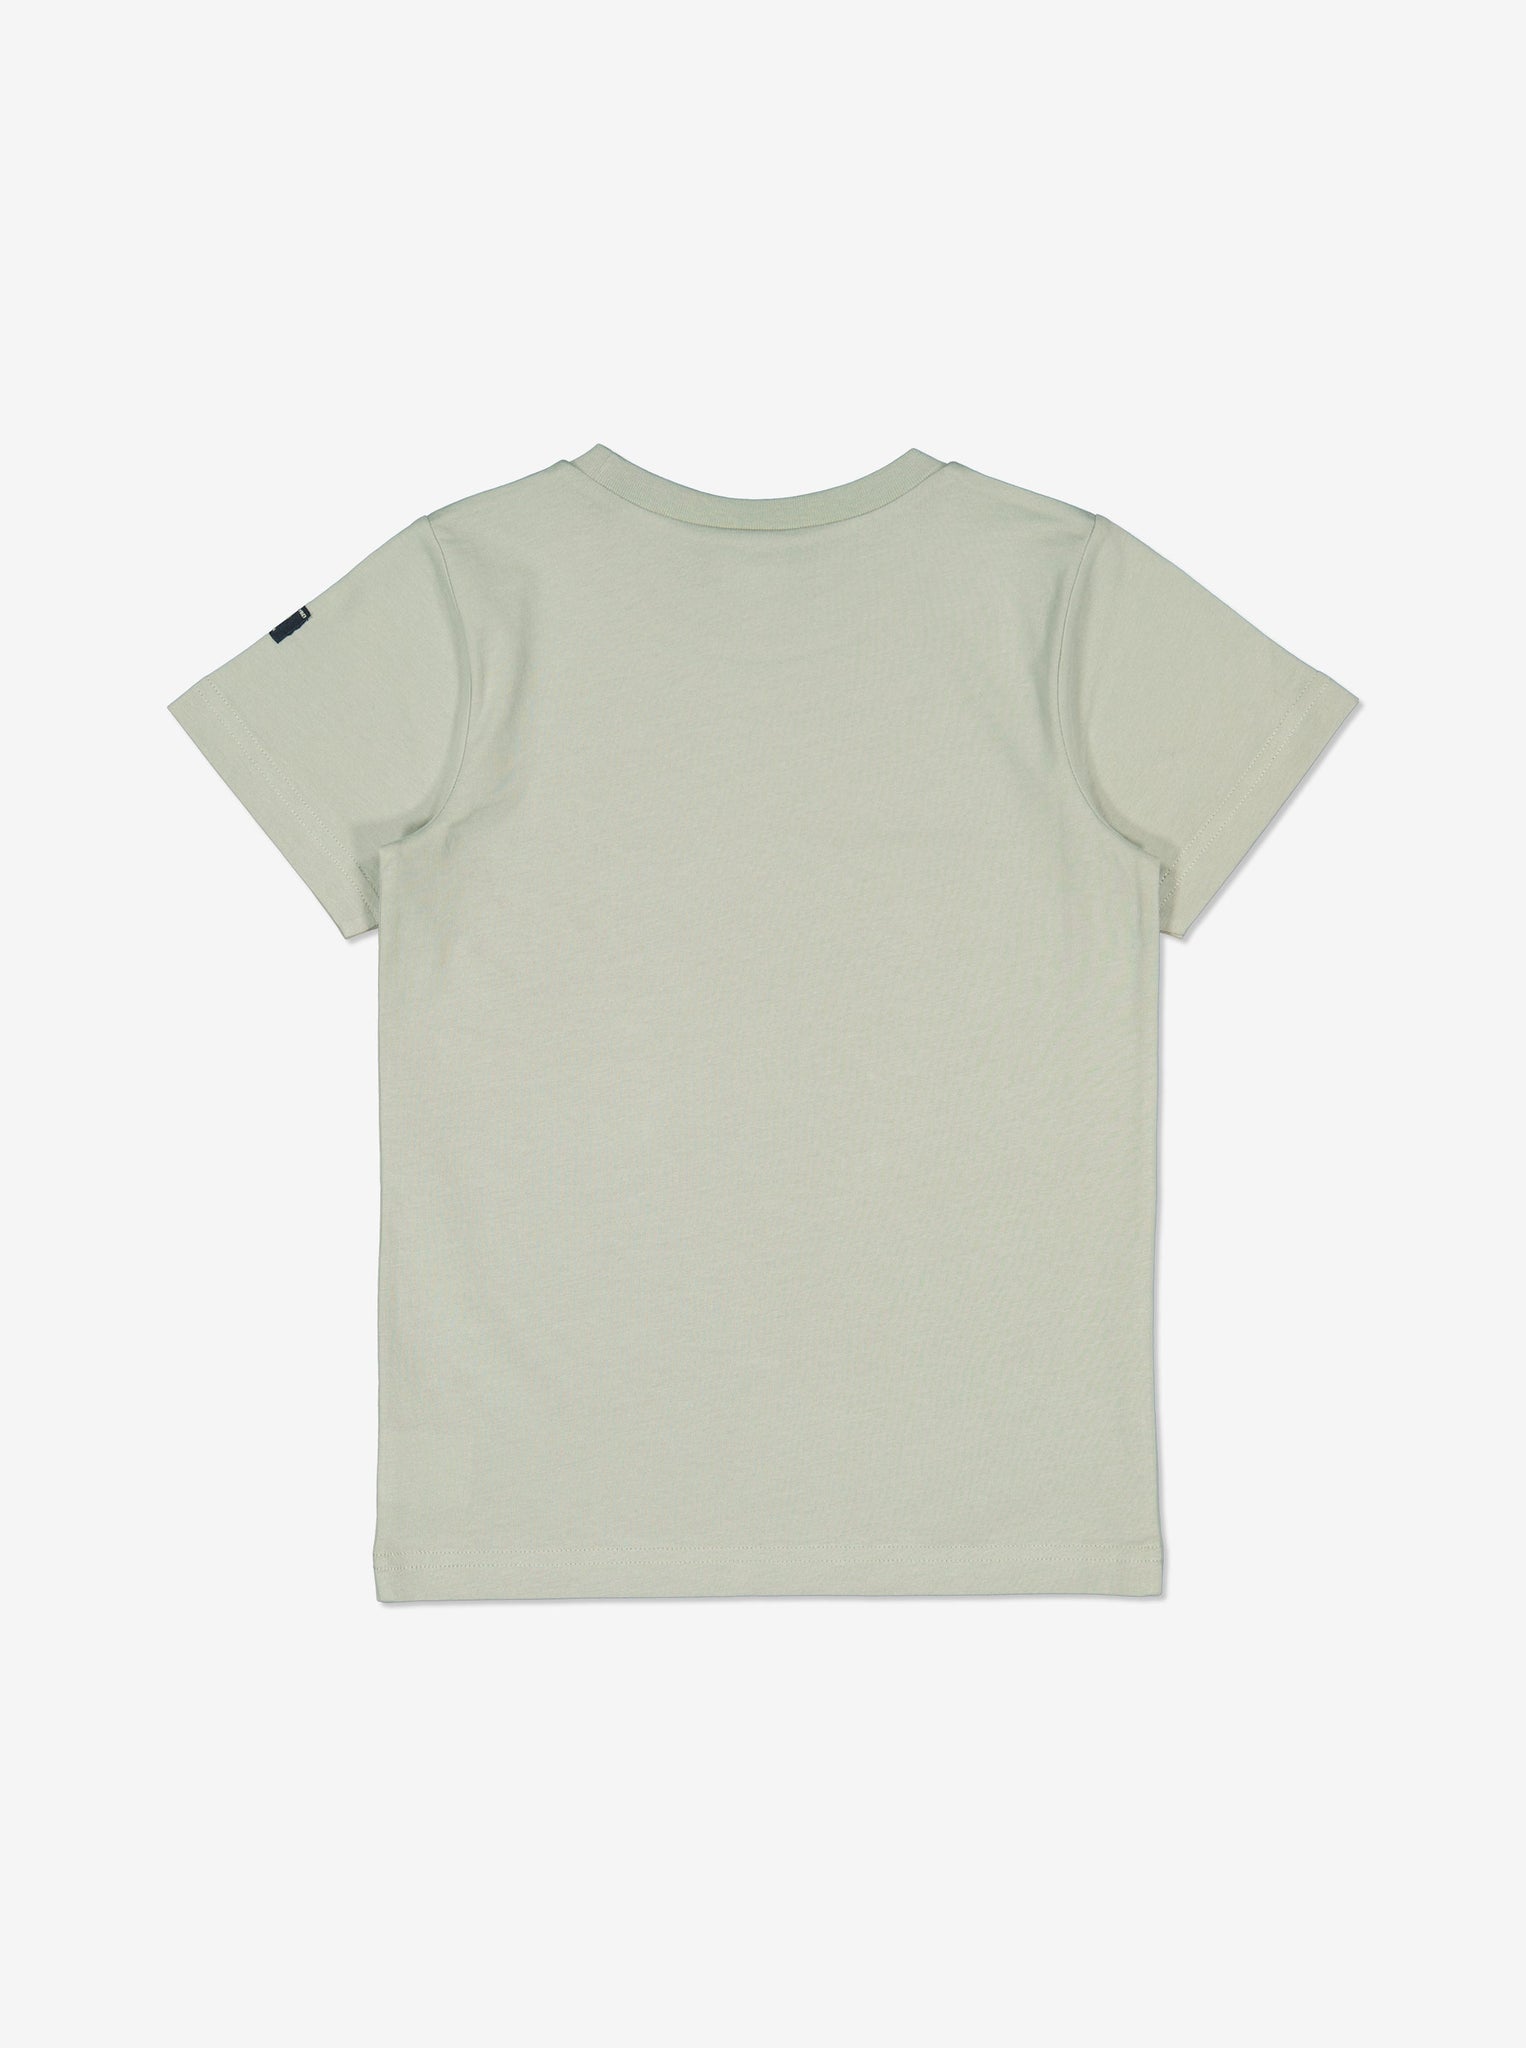 Organic Cotton Grey Kids T-Shirt